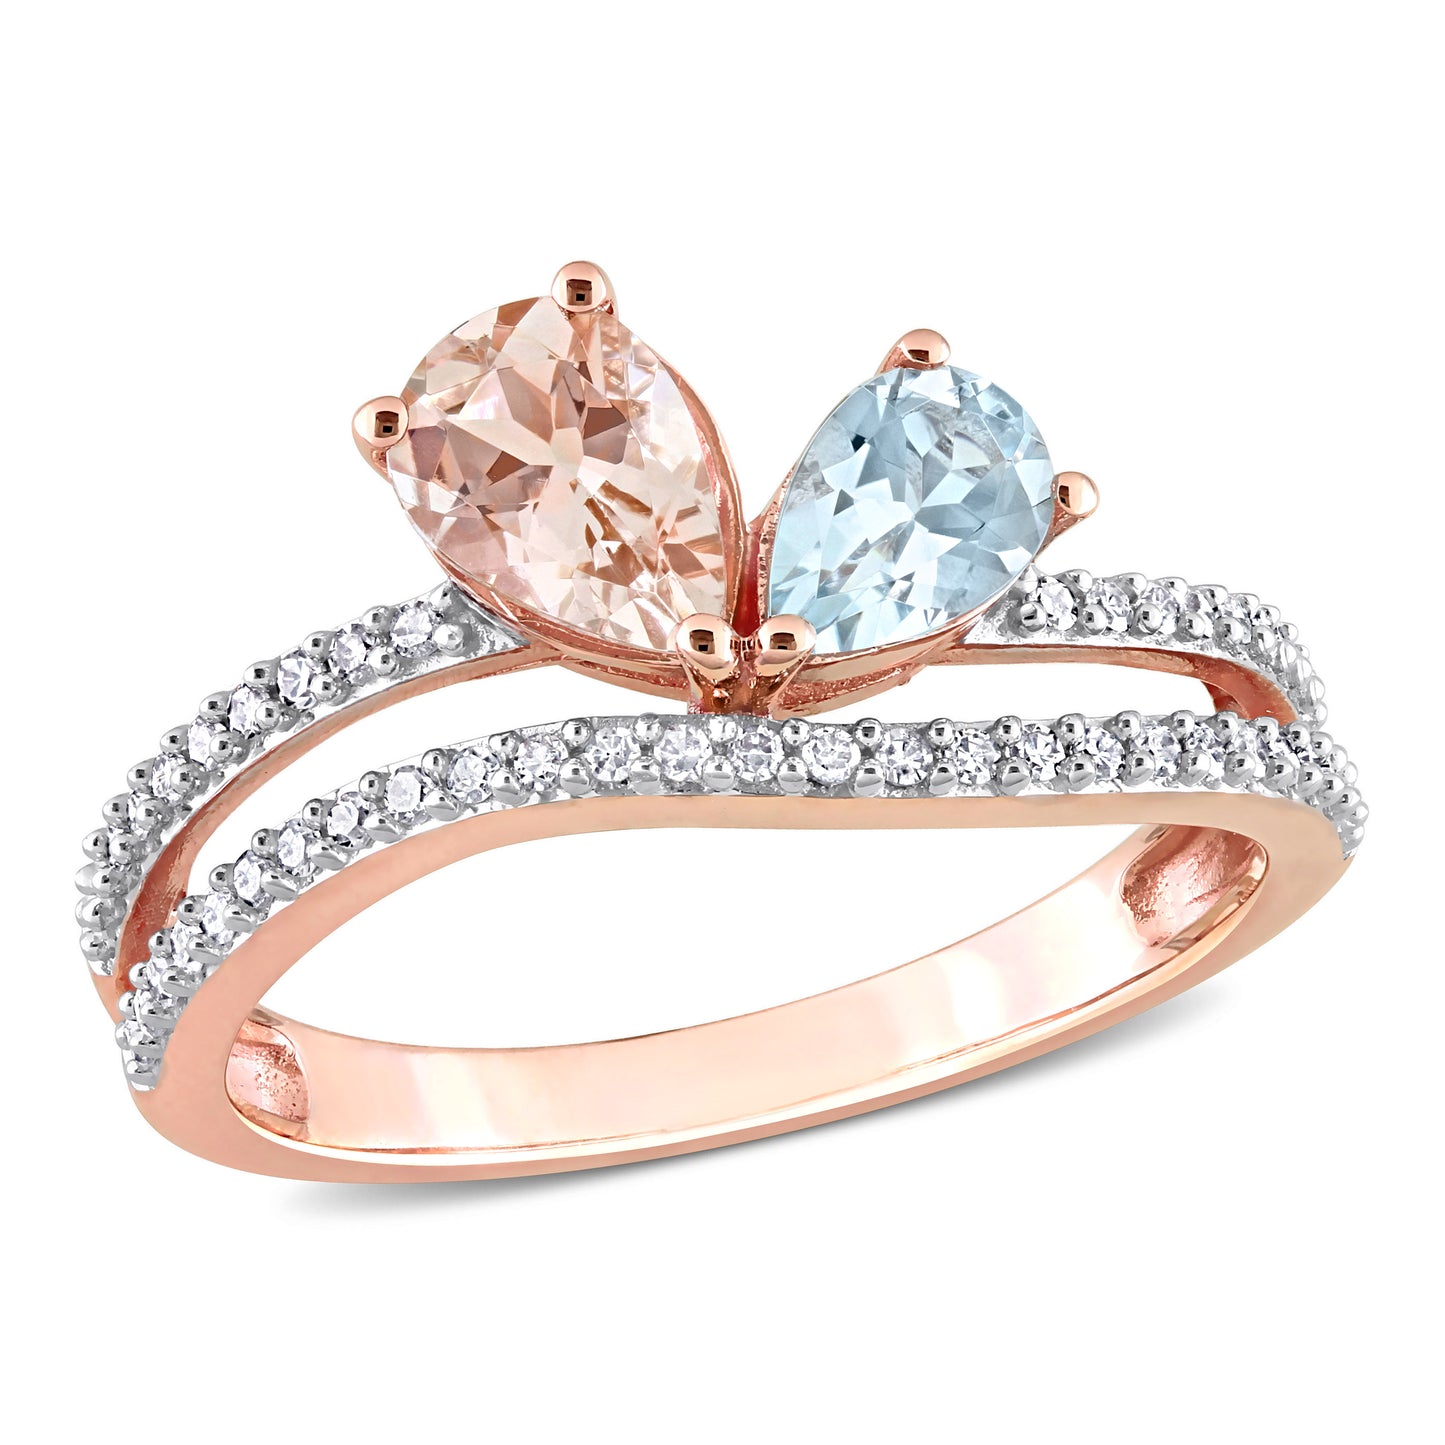 Double Band Morganite, Aquamarine & Diamond Ring in 10k Rose Gold